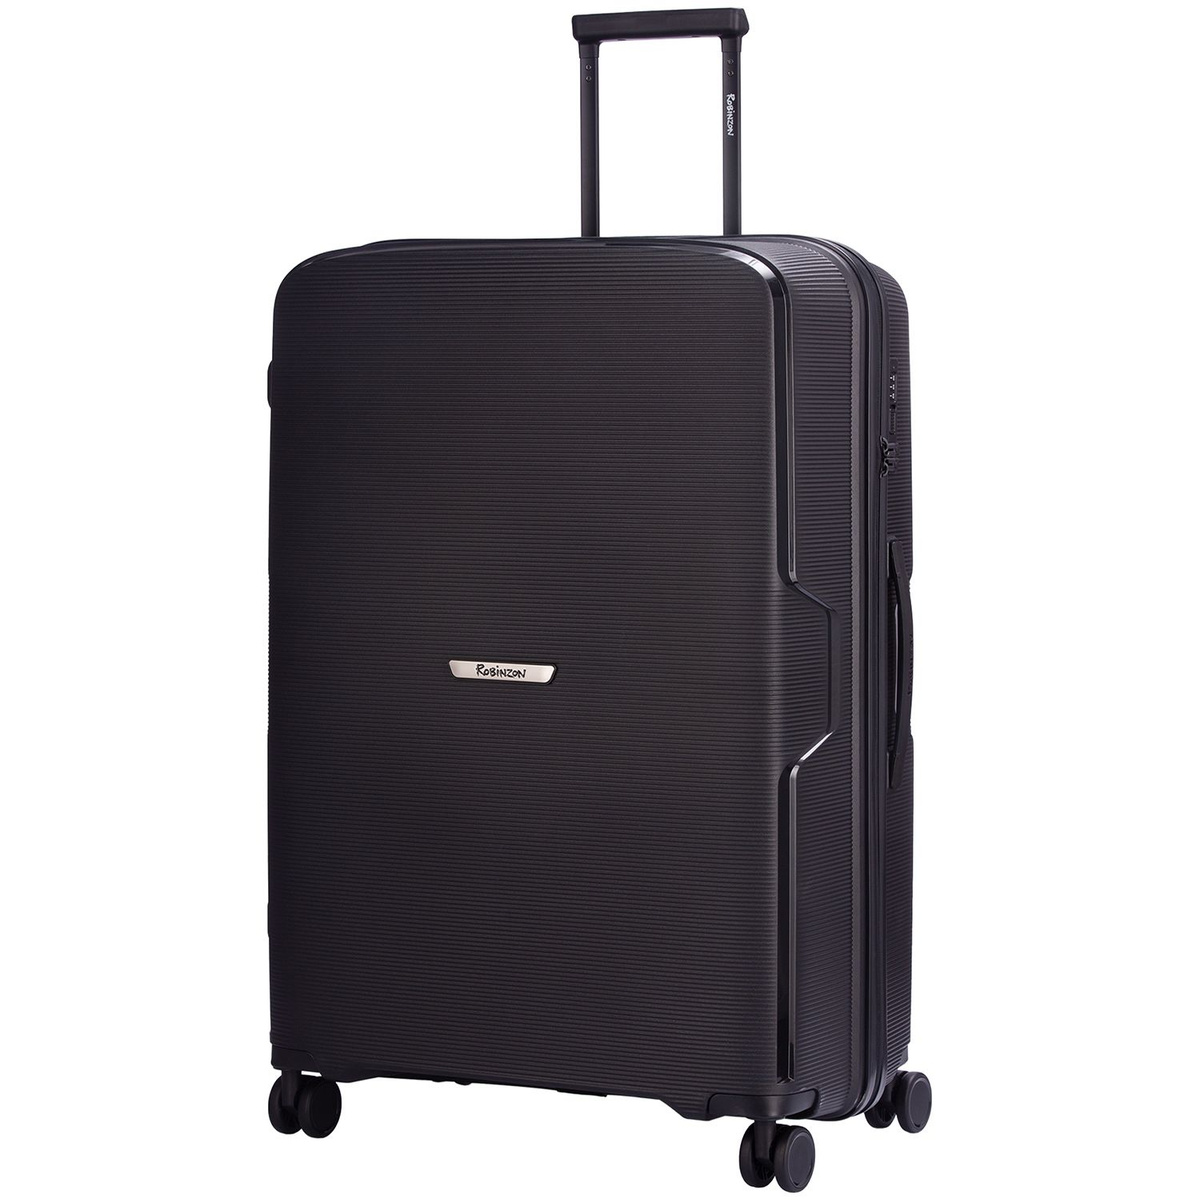 Габариты чемодана: 52x77x29 см Вес чемодана: 3,7 кг Объём чемодана: 103 л